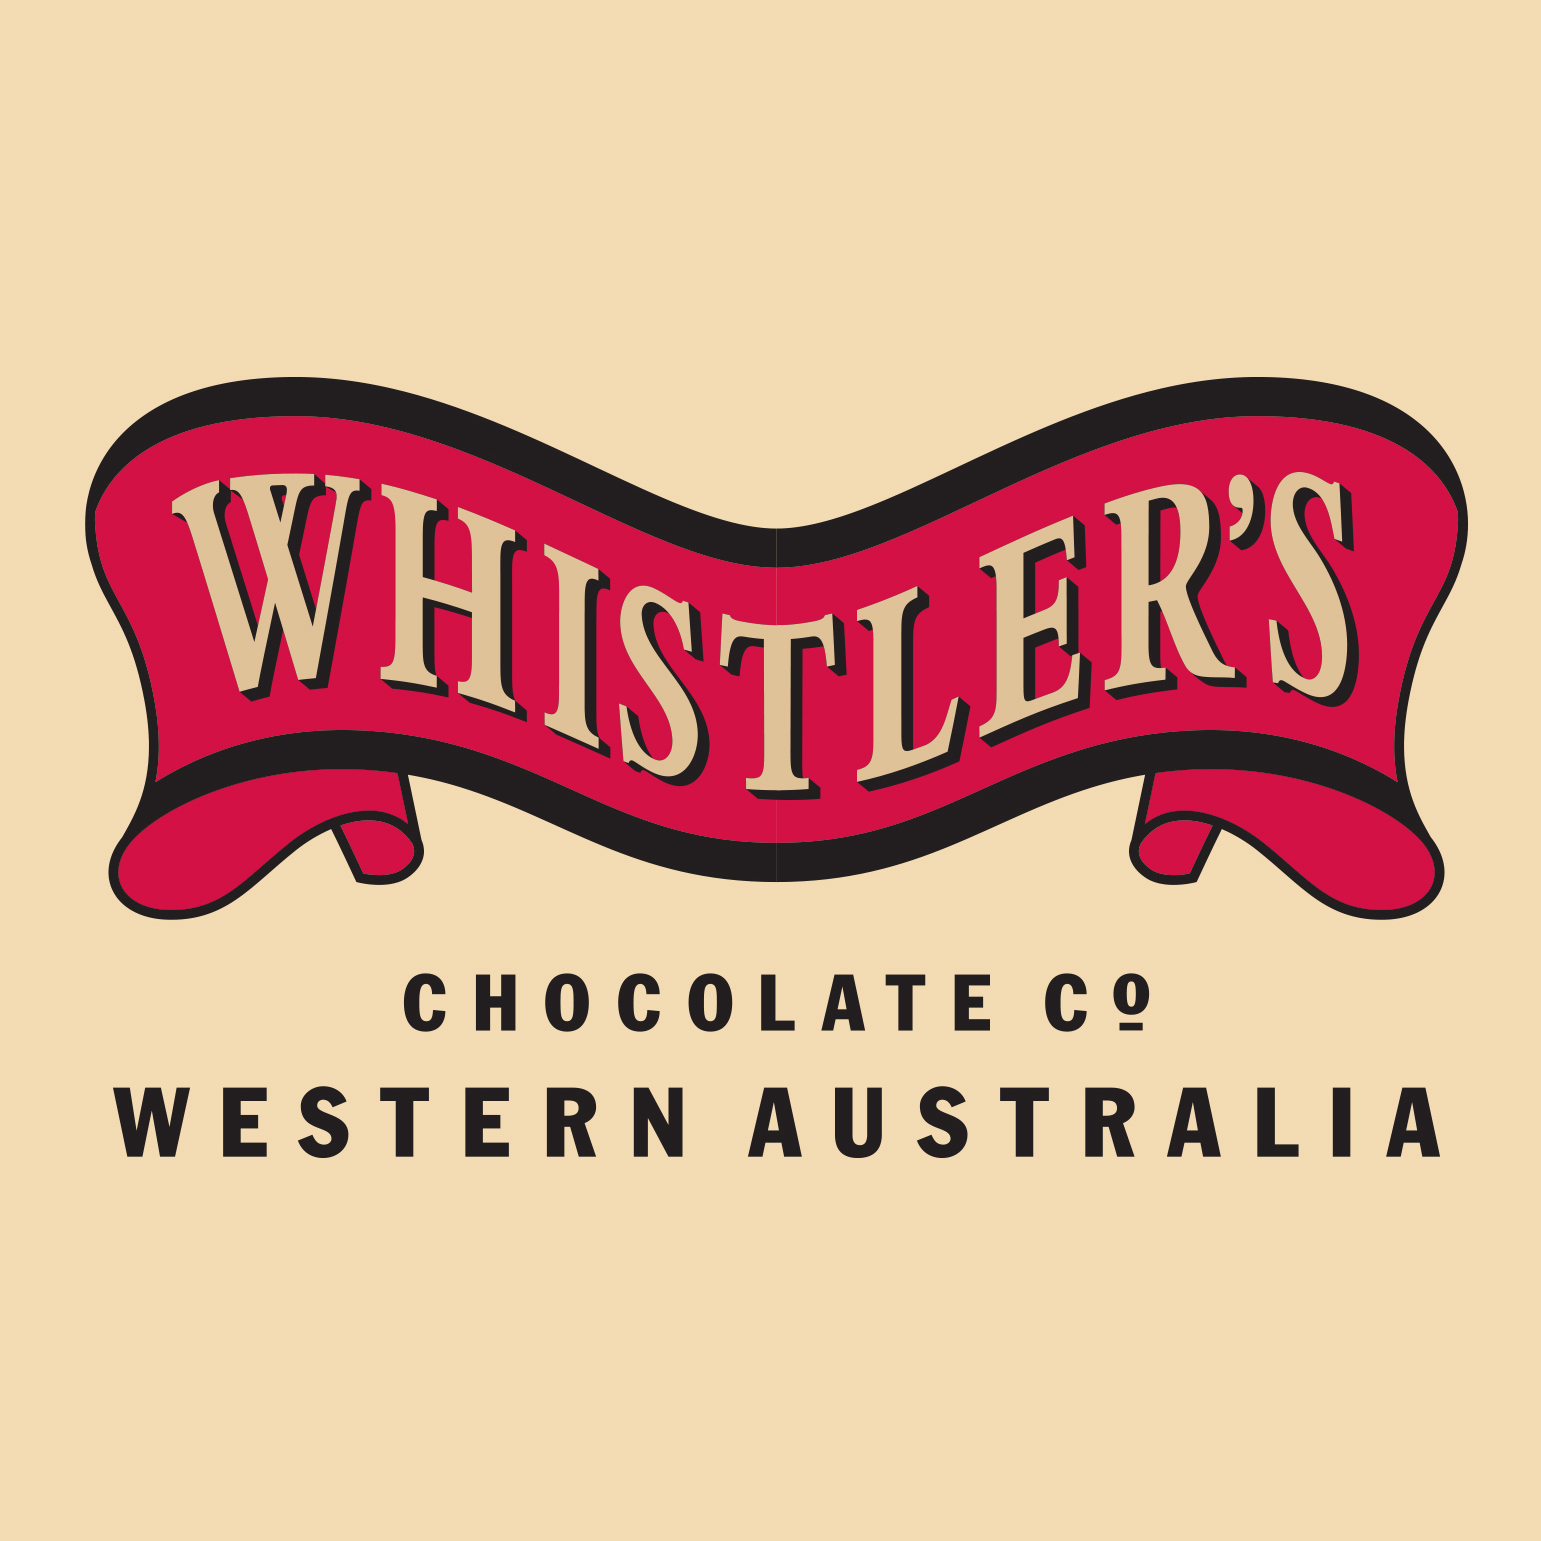 Whistler's Chocolate Company